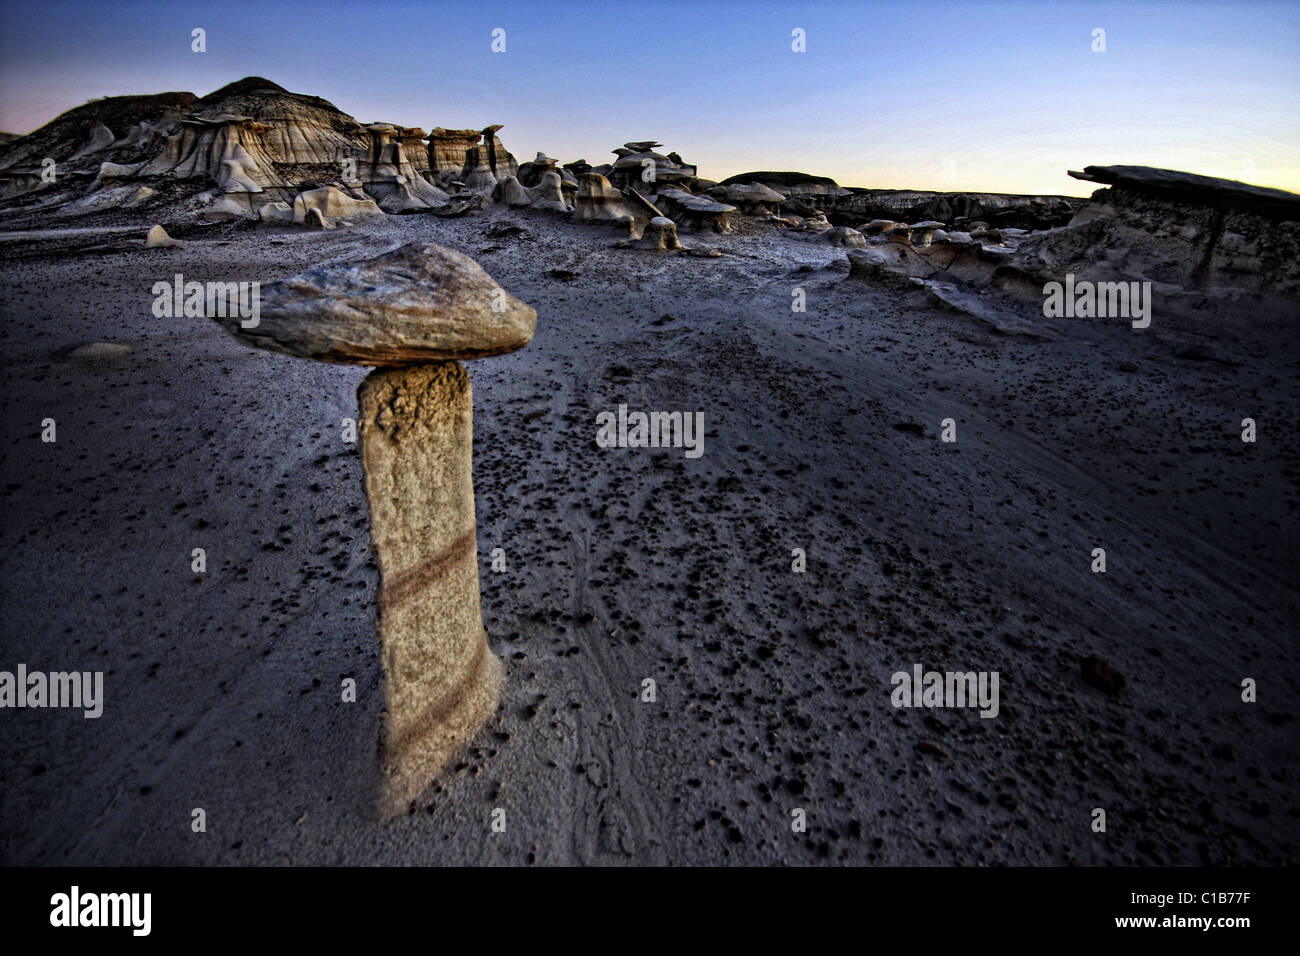 Bisti Badlands rock formations Stock Photo